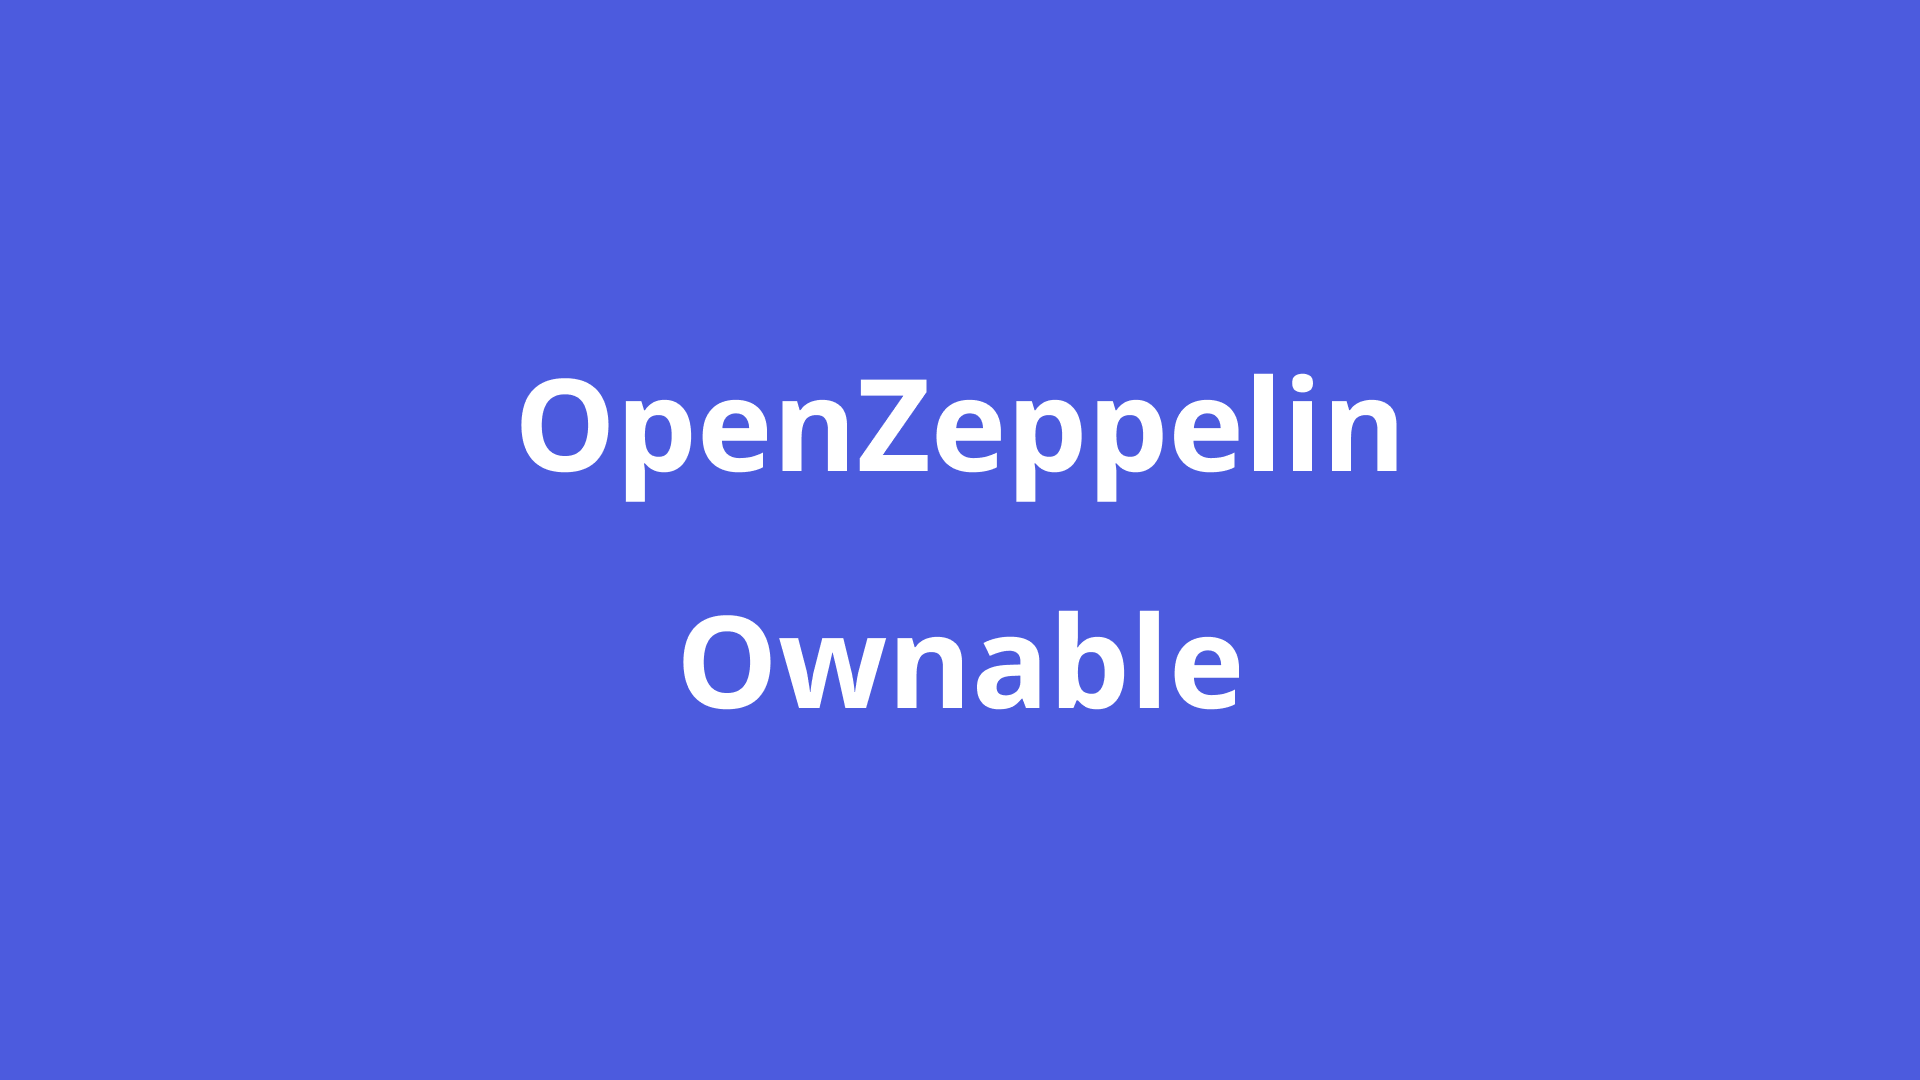 openZeppelin ownable